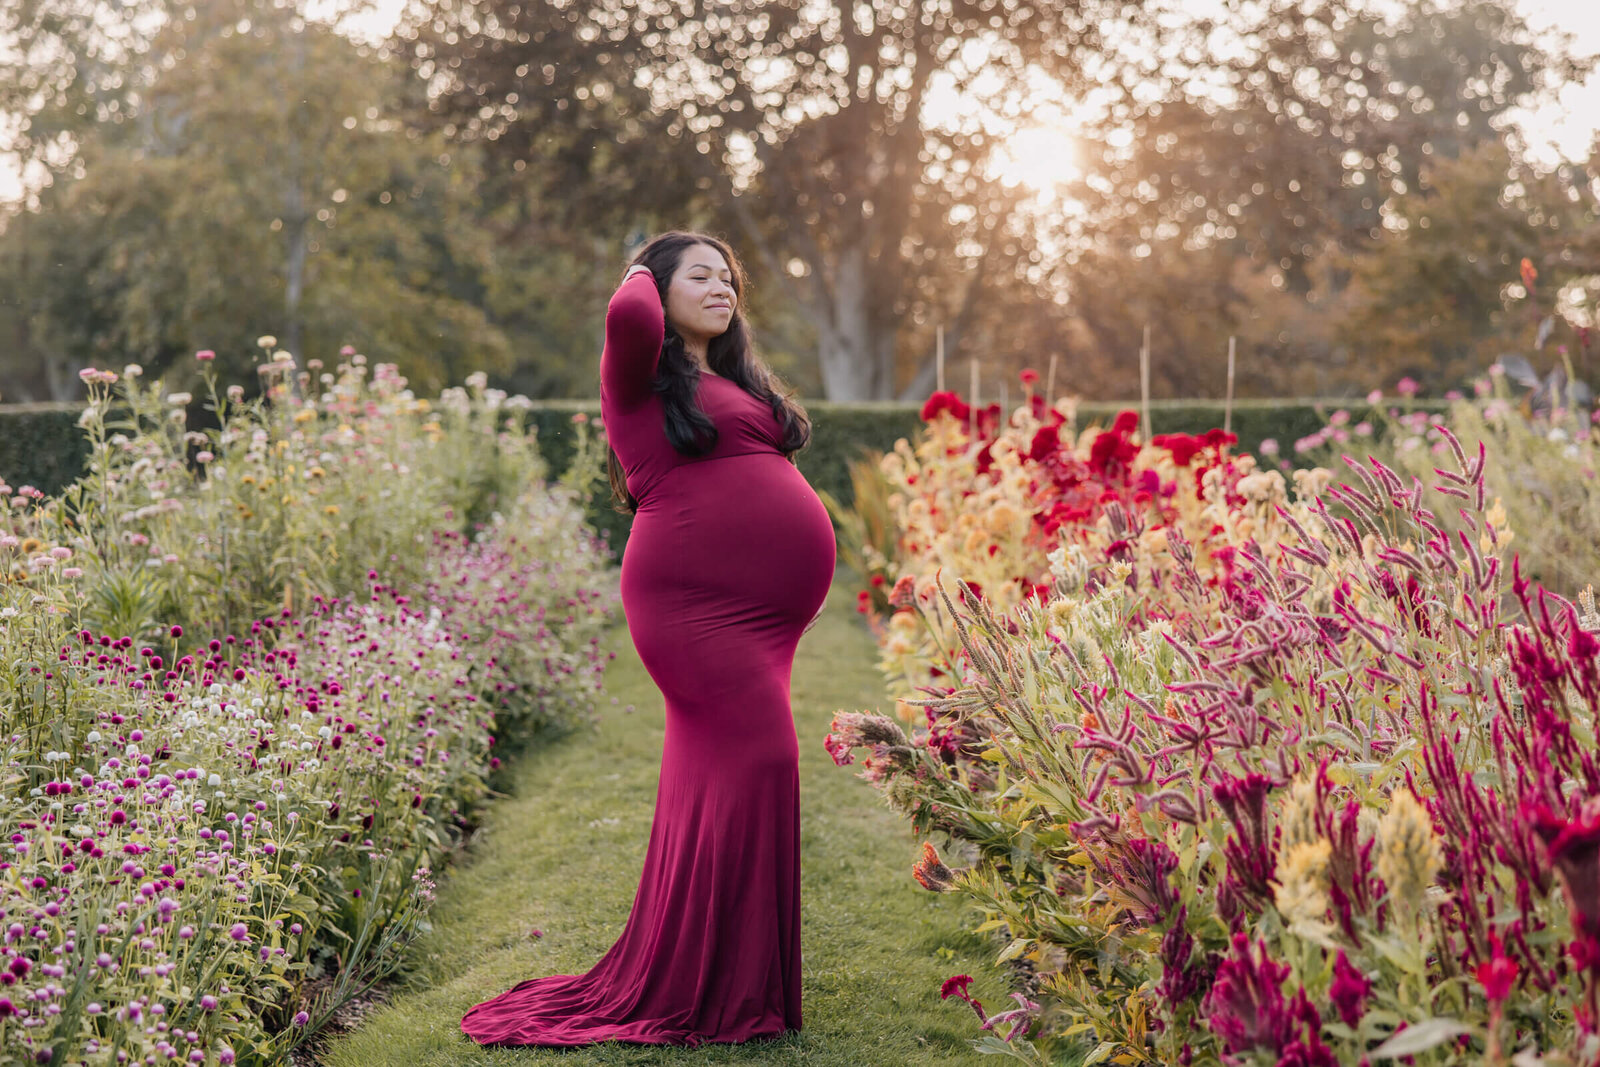 Pregnant woman in empowering pose in flower garden